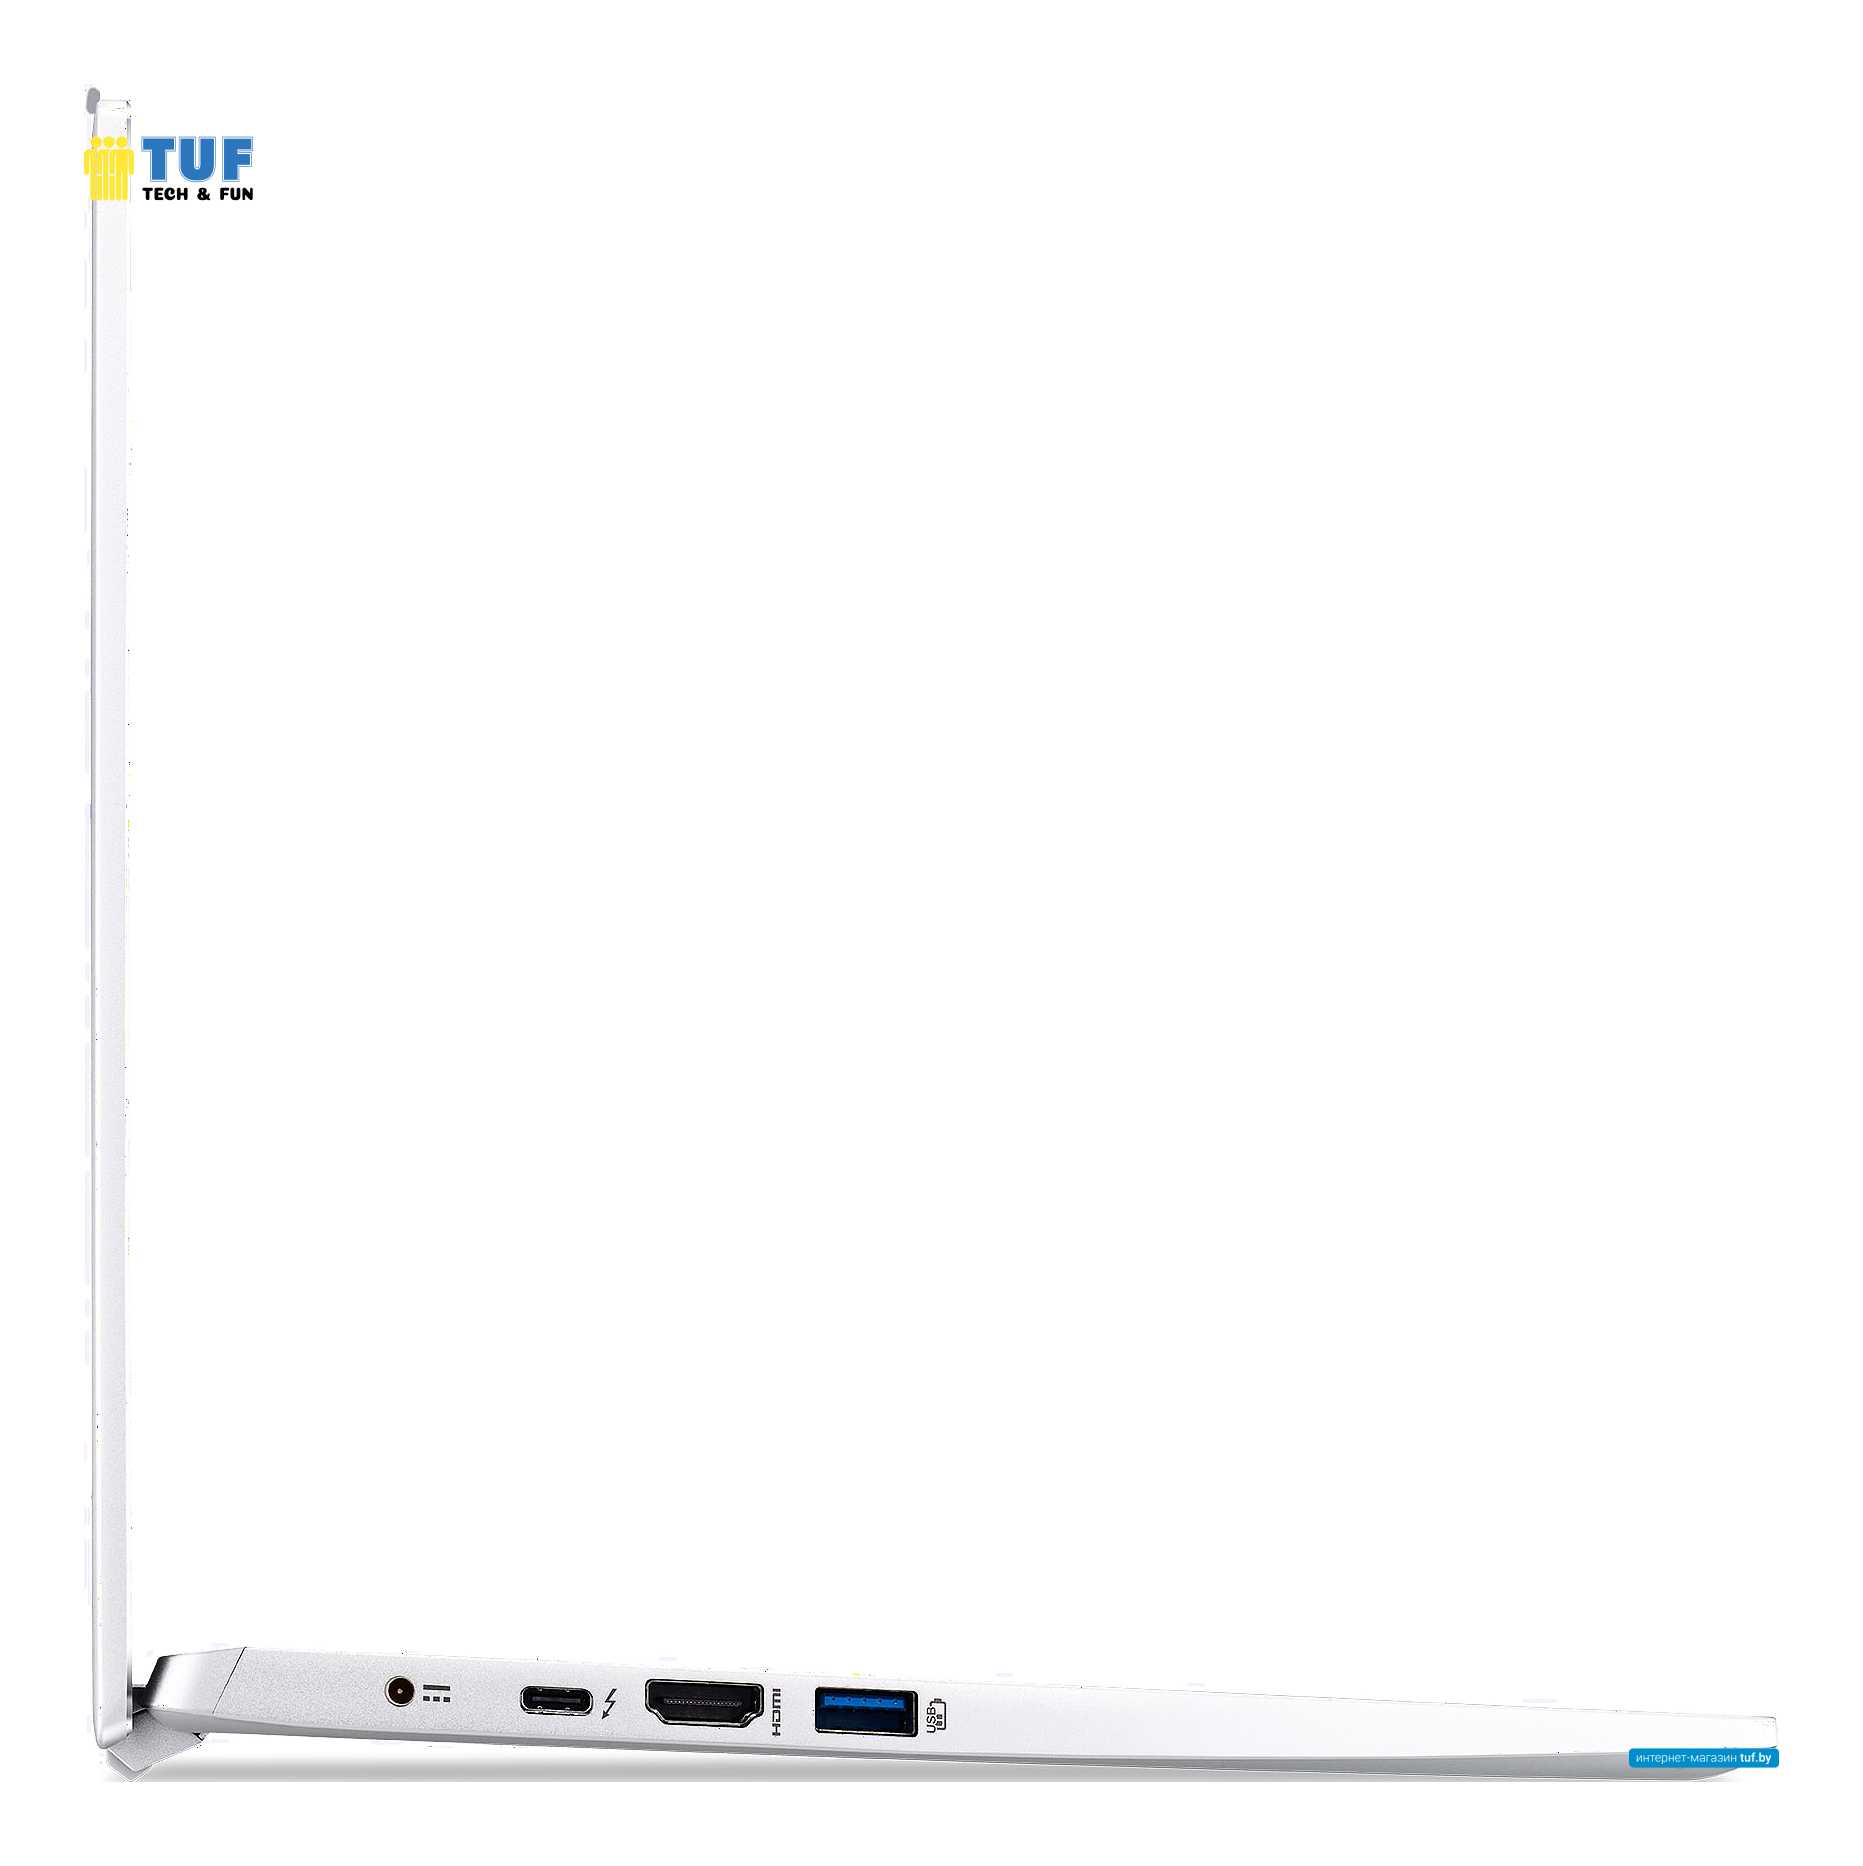 Ноутбук Acer Swift 3 SF314-511-56LM NX.ABLEU.00D